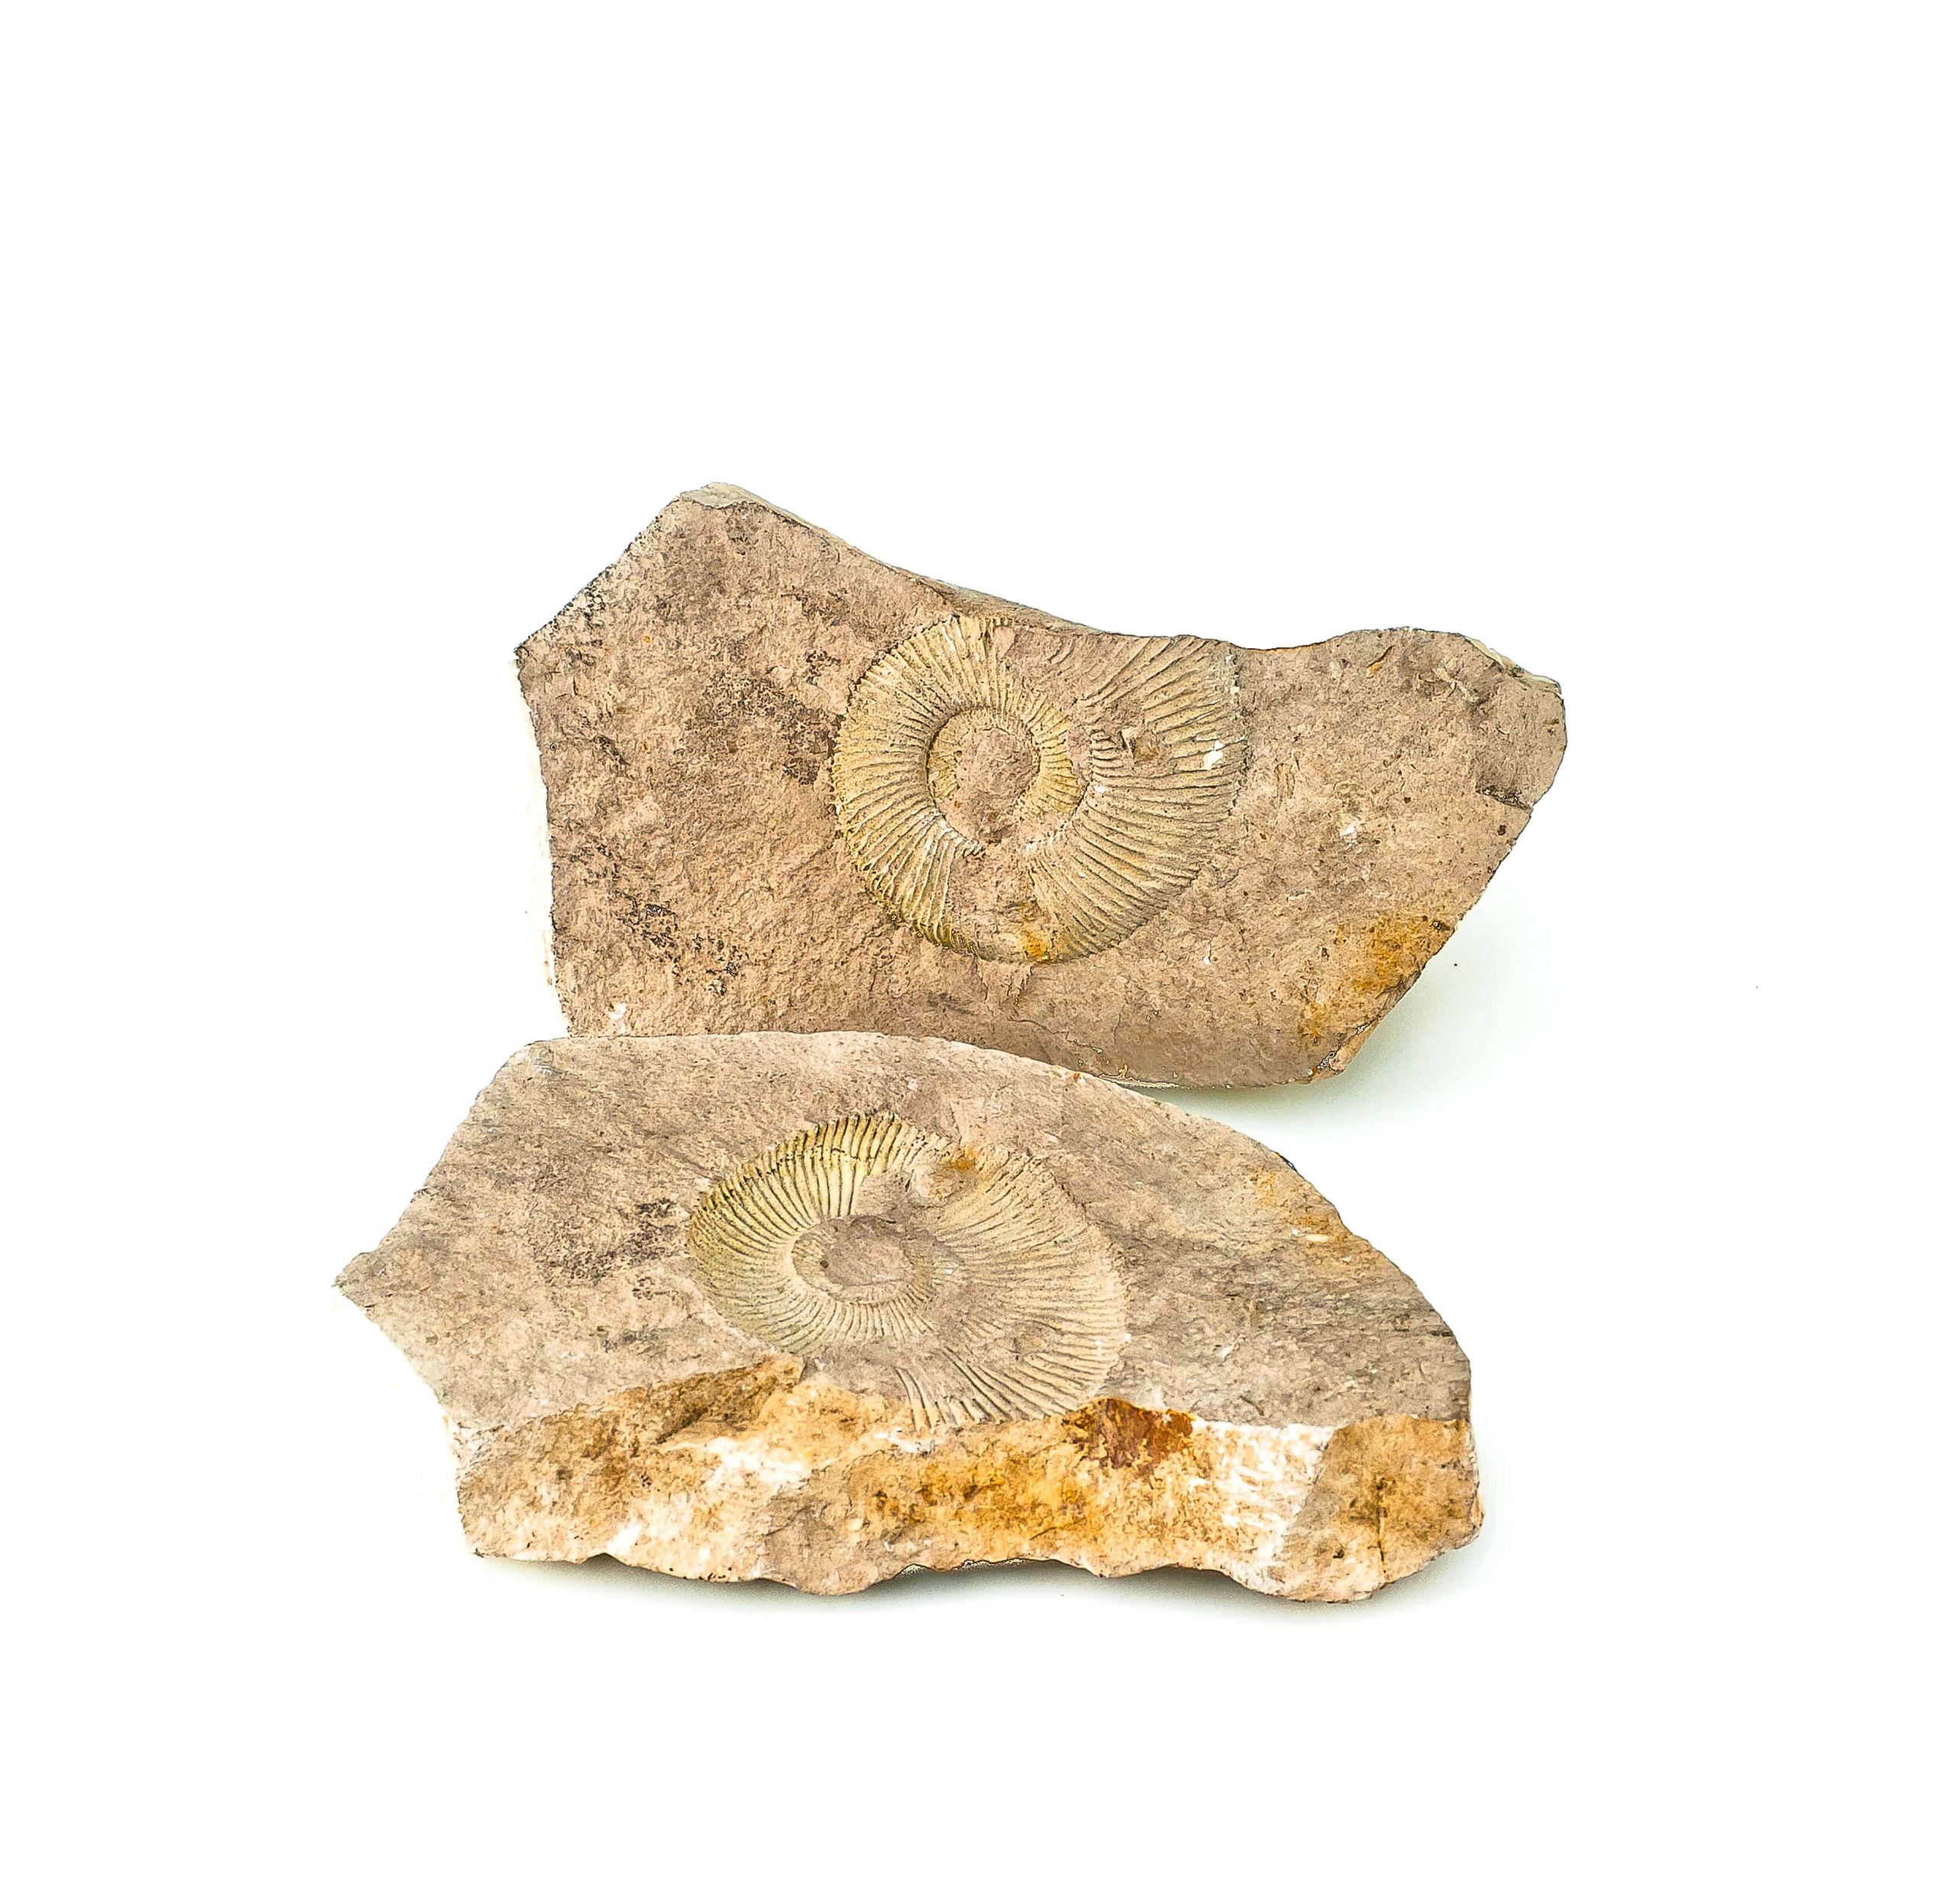 0342 P. P. Amonit +jego negatyw, era mezozoiczna – Jura -201 – 145 milionów lat temu.